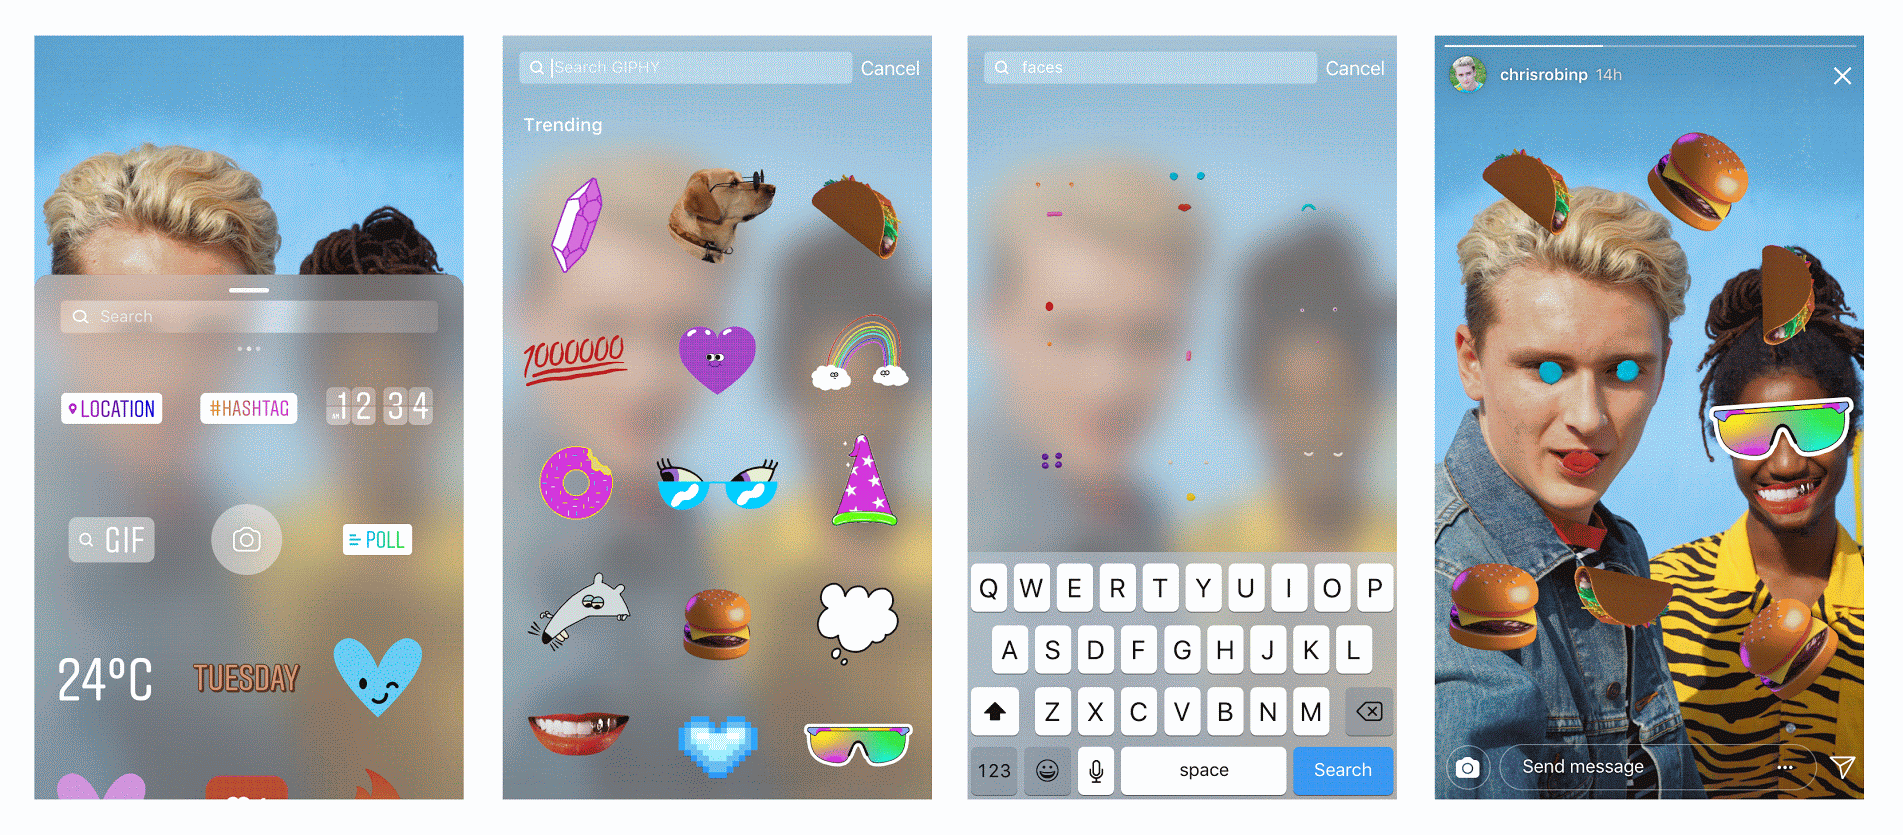 Instagram is the next platform to add GIF stickers - Ausdroid